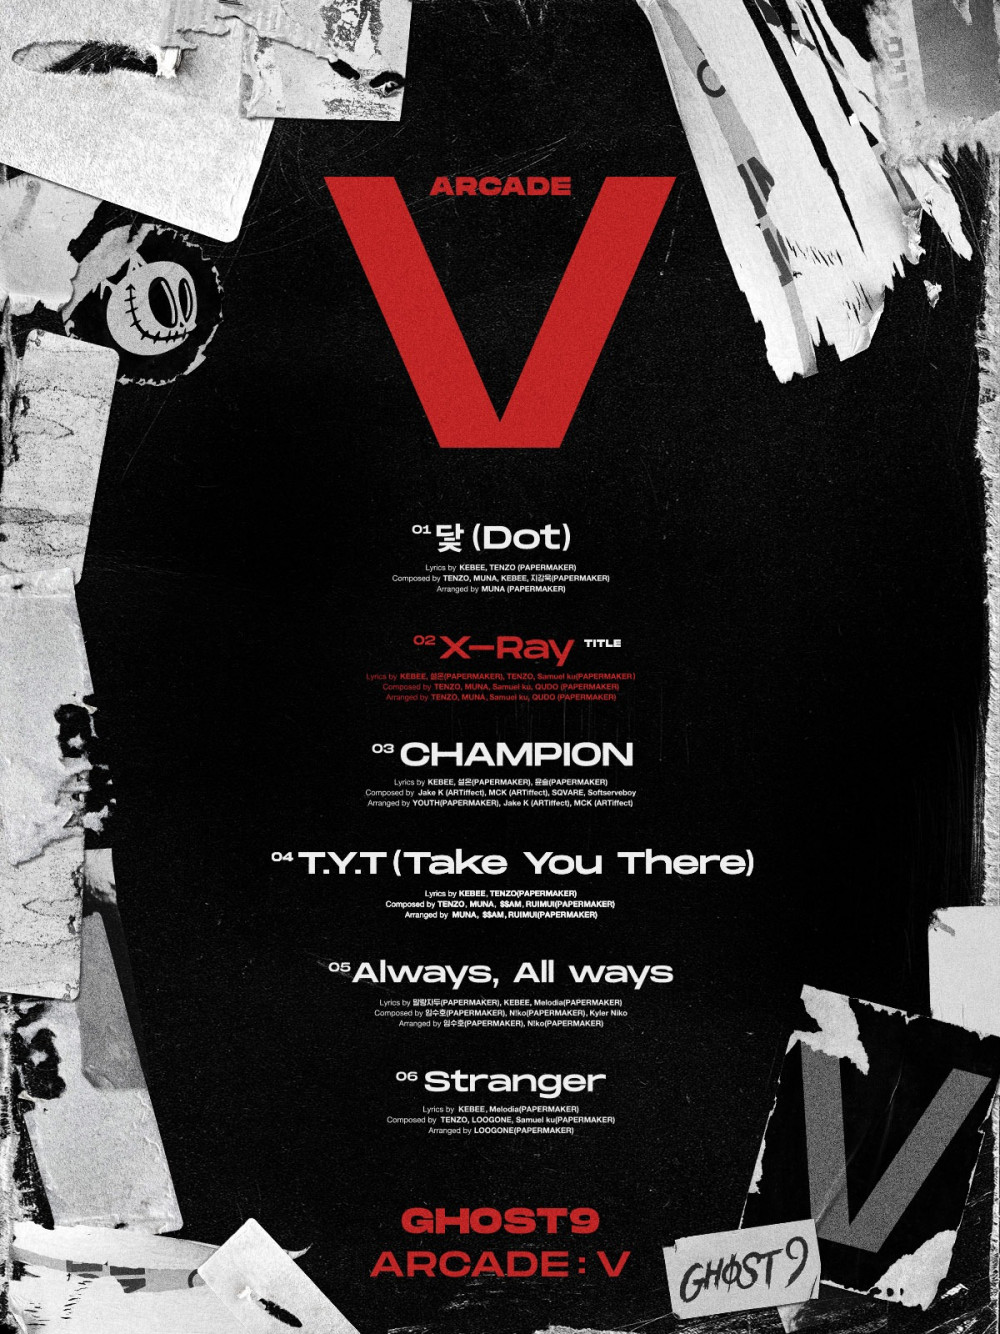 [Камбэк] Ghost9 альбом «Arcade: V»: музыкальный клип